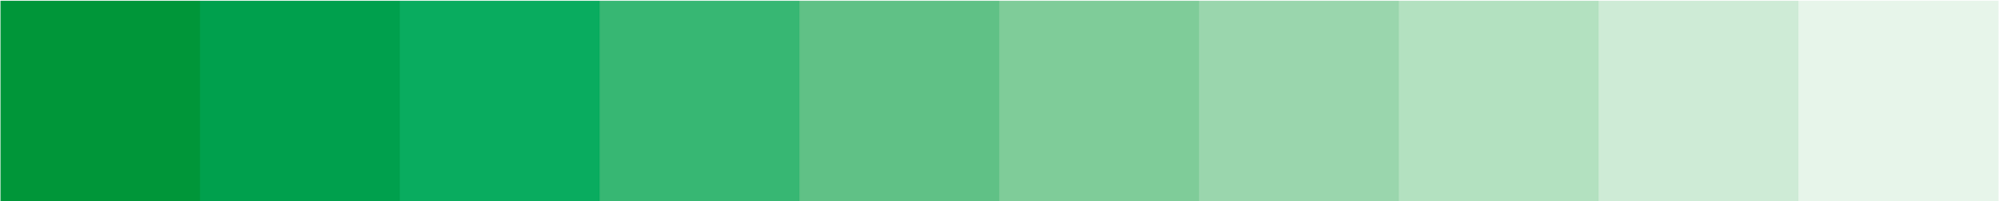 Nittedal kommune primærfarge grønn